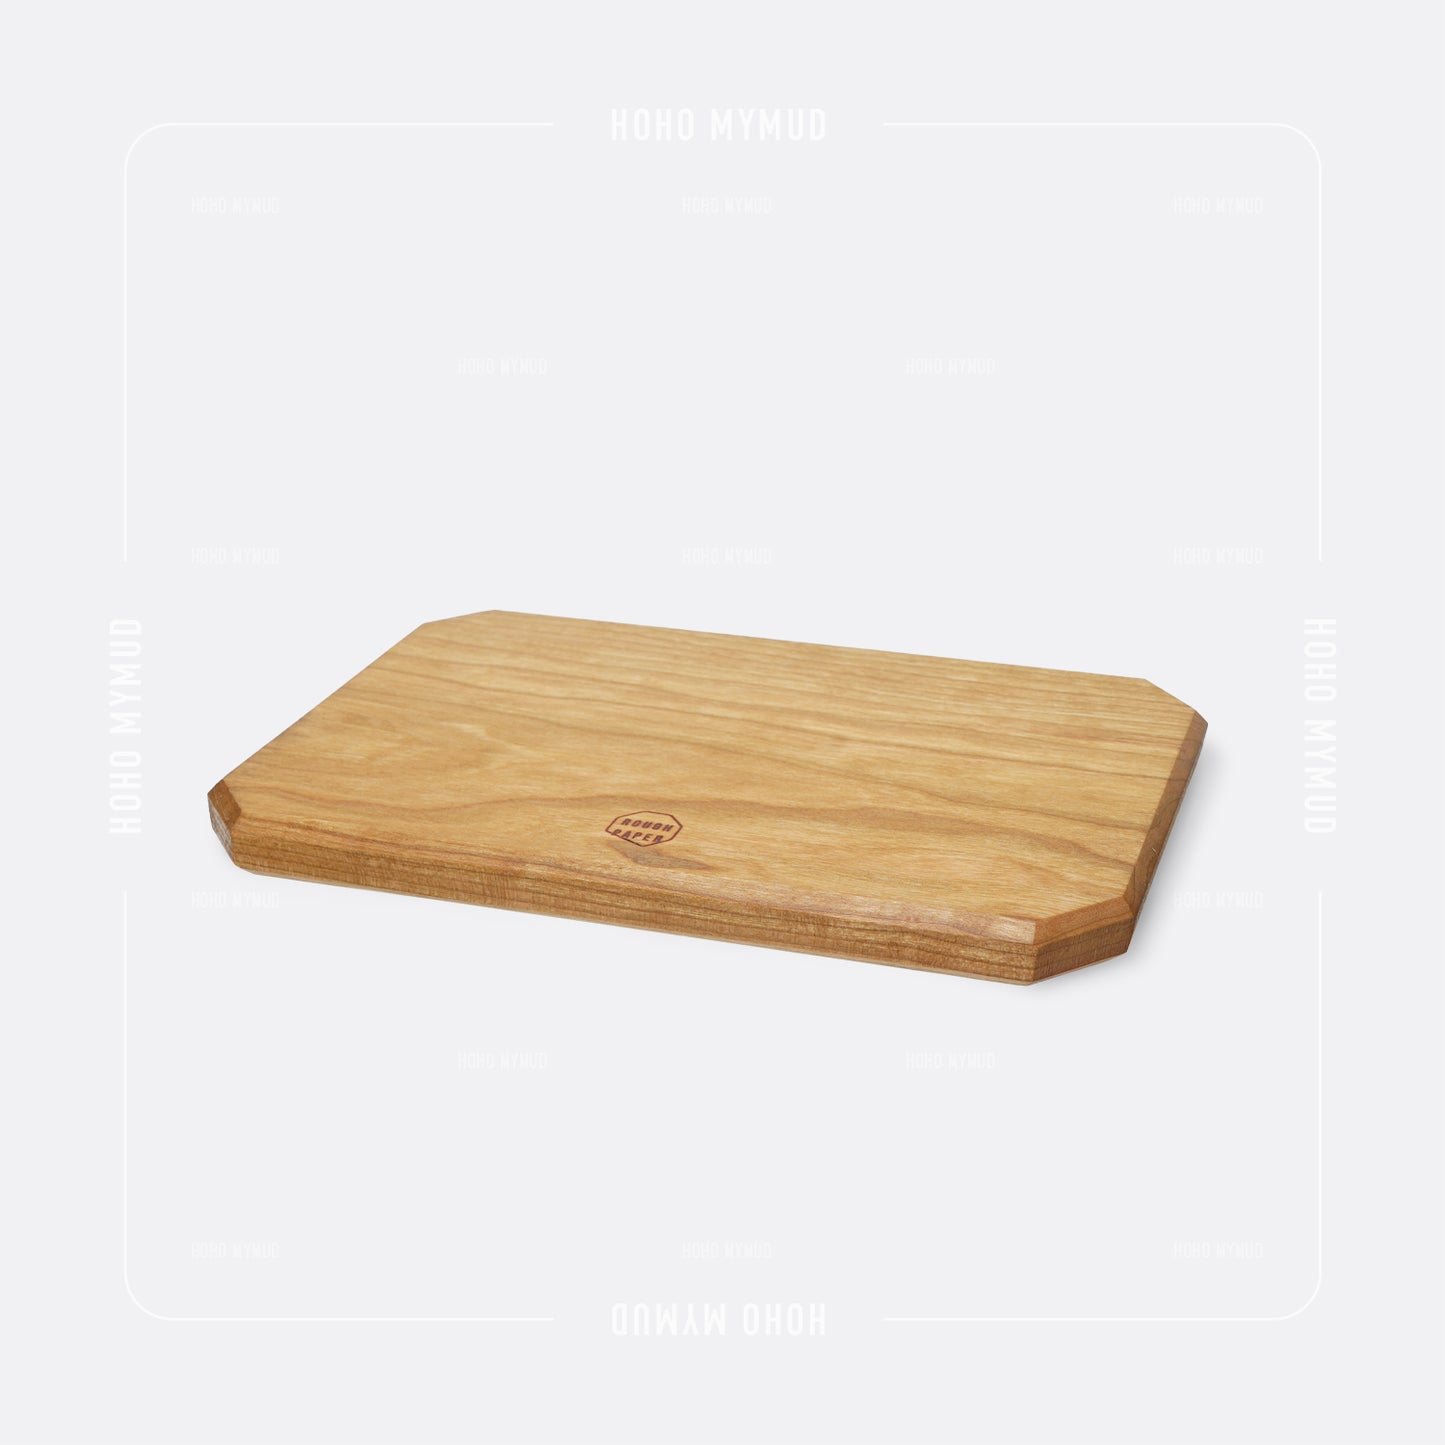 Rough Paper Wooden Cutting Board for Trangia Mess Tin 209 美國櫻桃木製便攜砧板